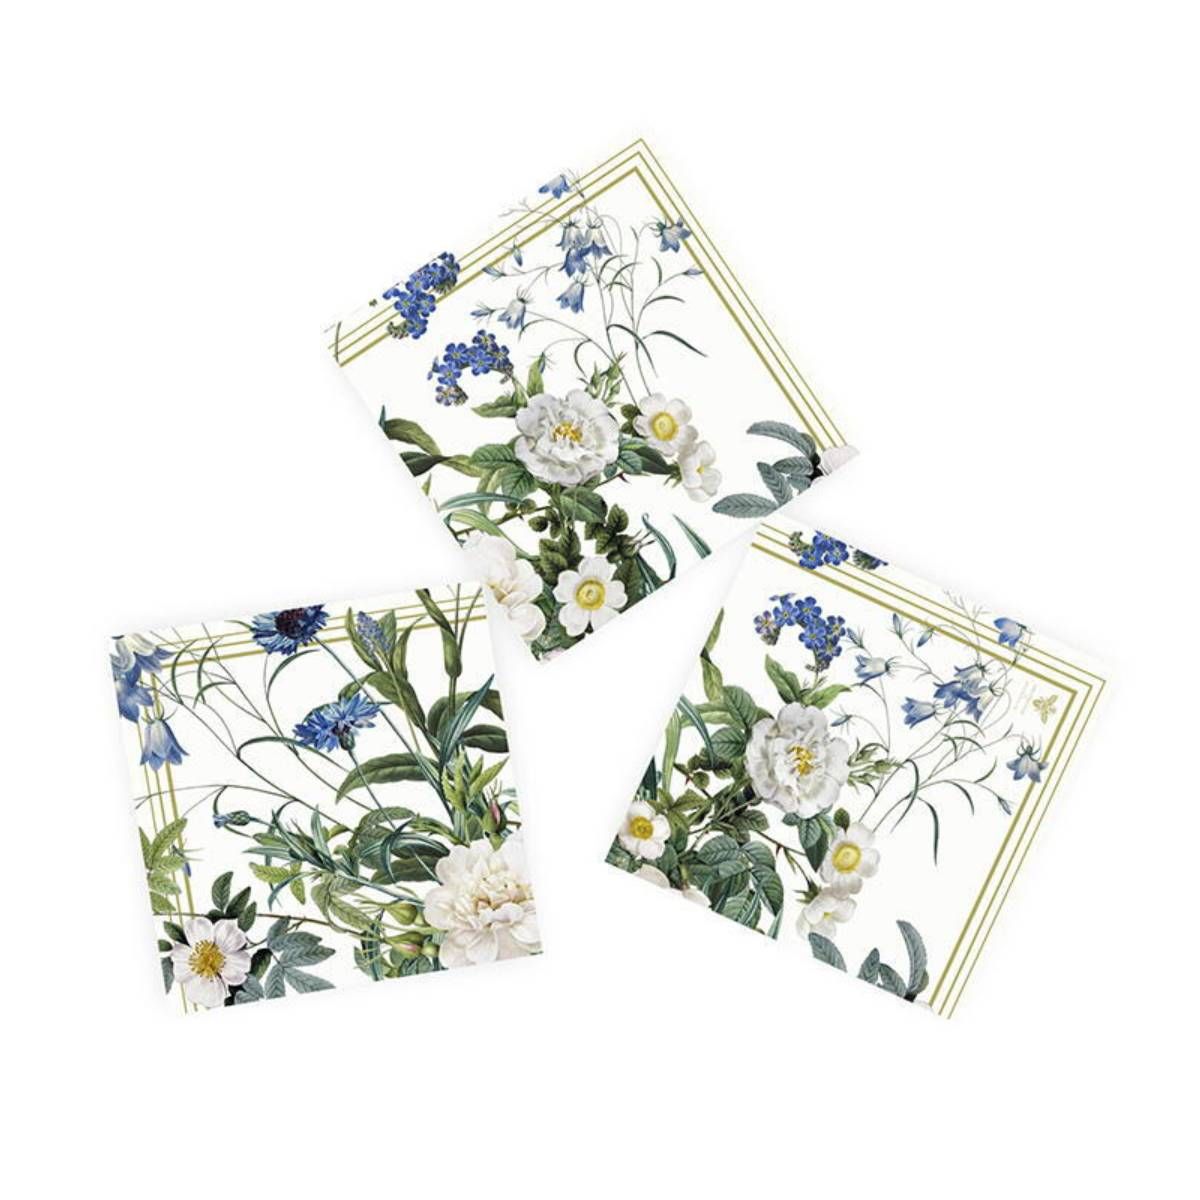 Miljøvenlige servietter fra Koustrup & Co. trykt med blå blomster i elegant look